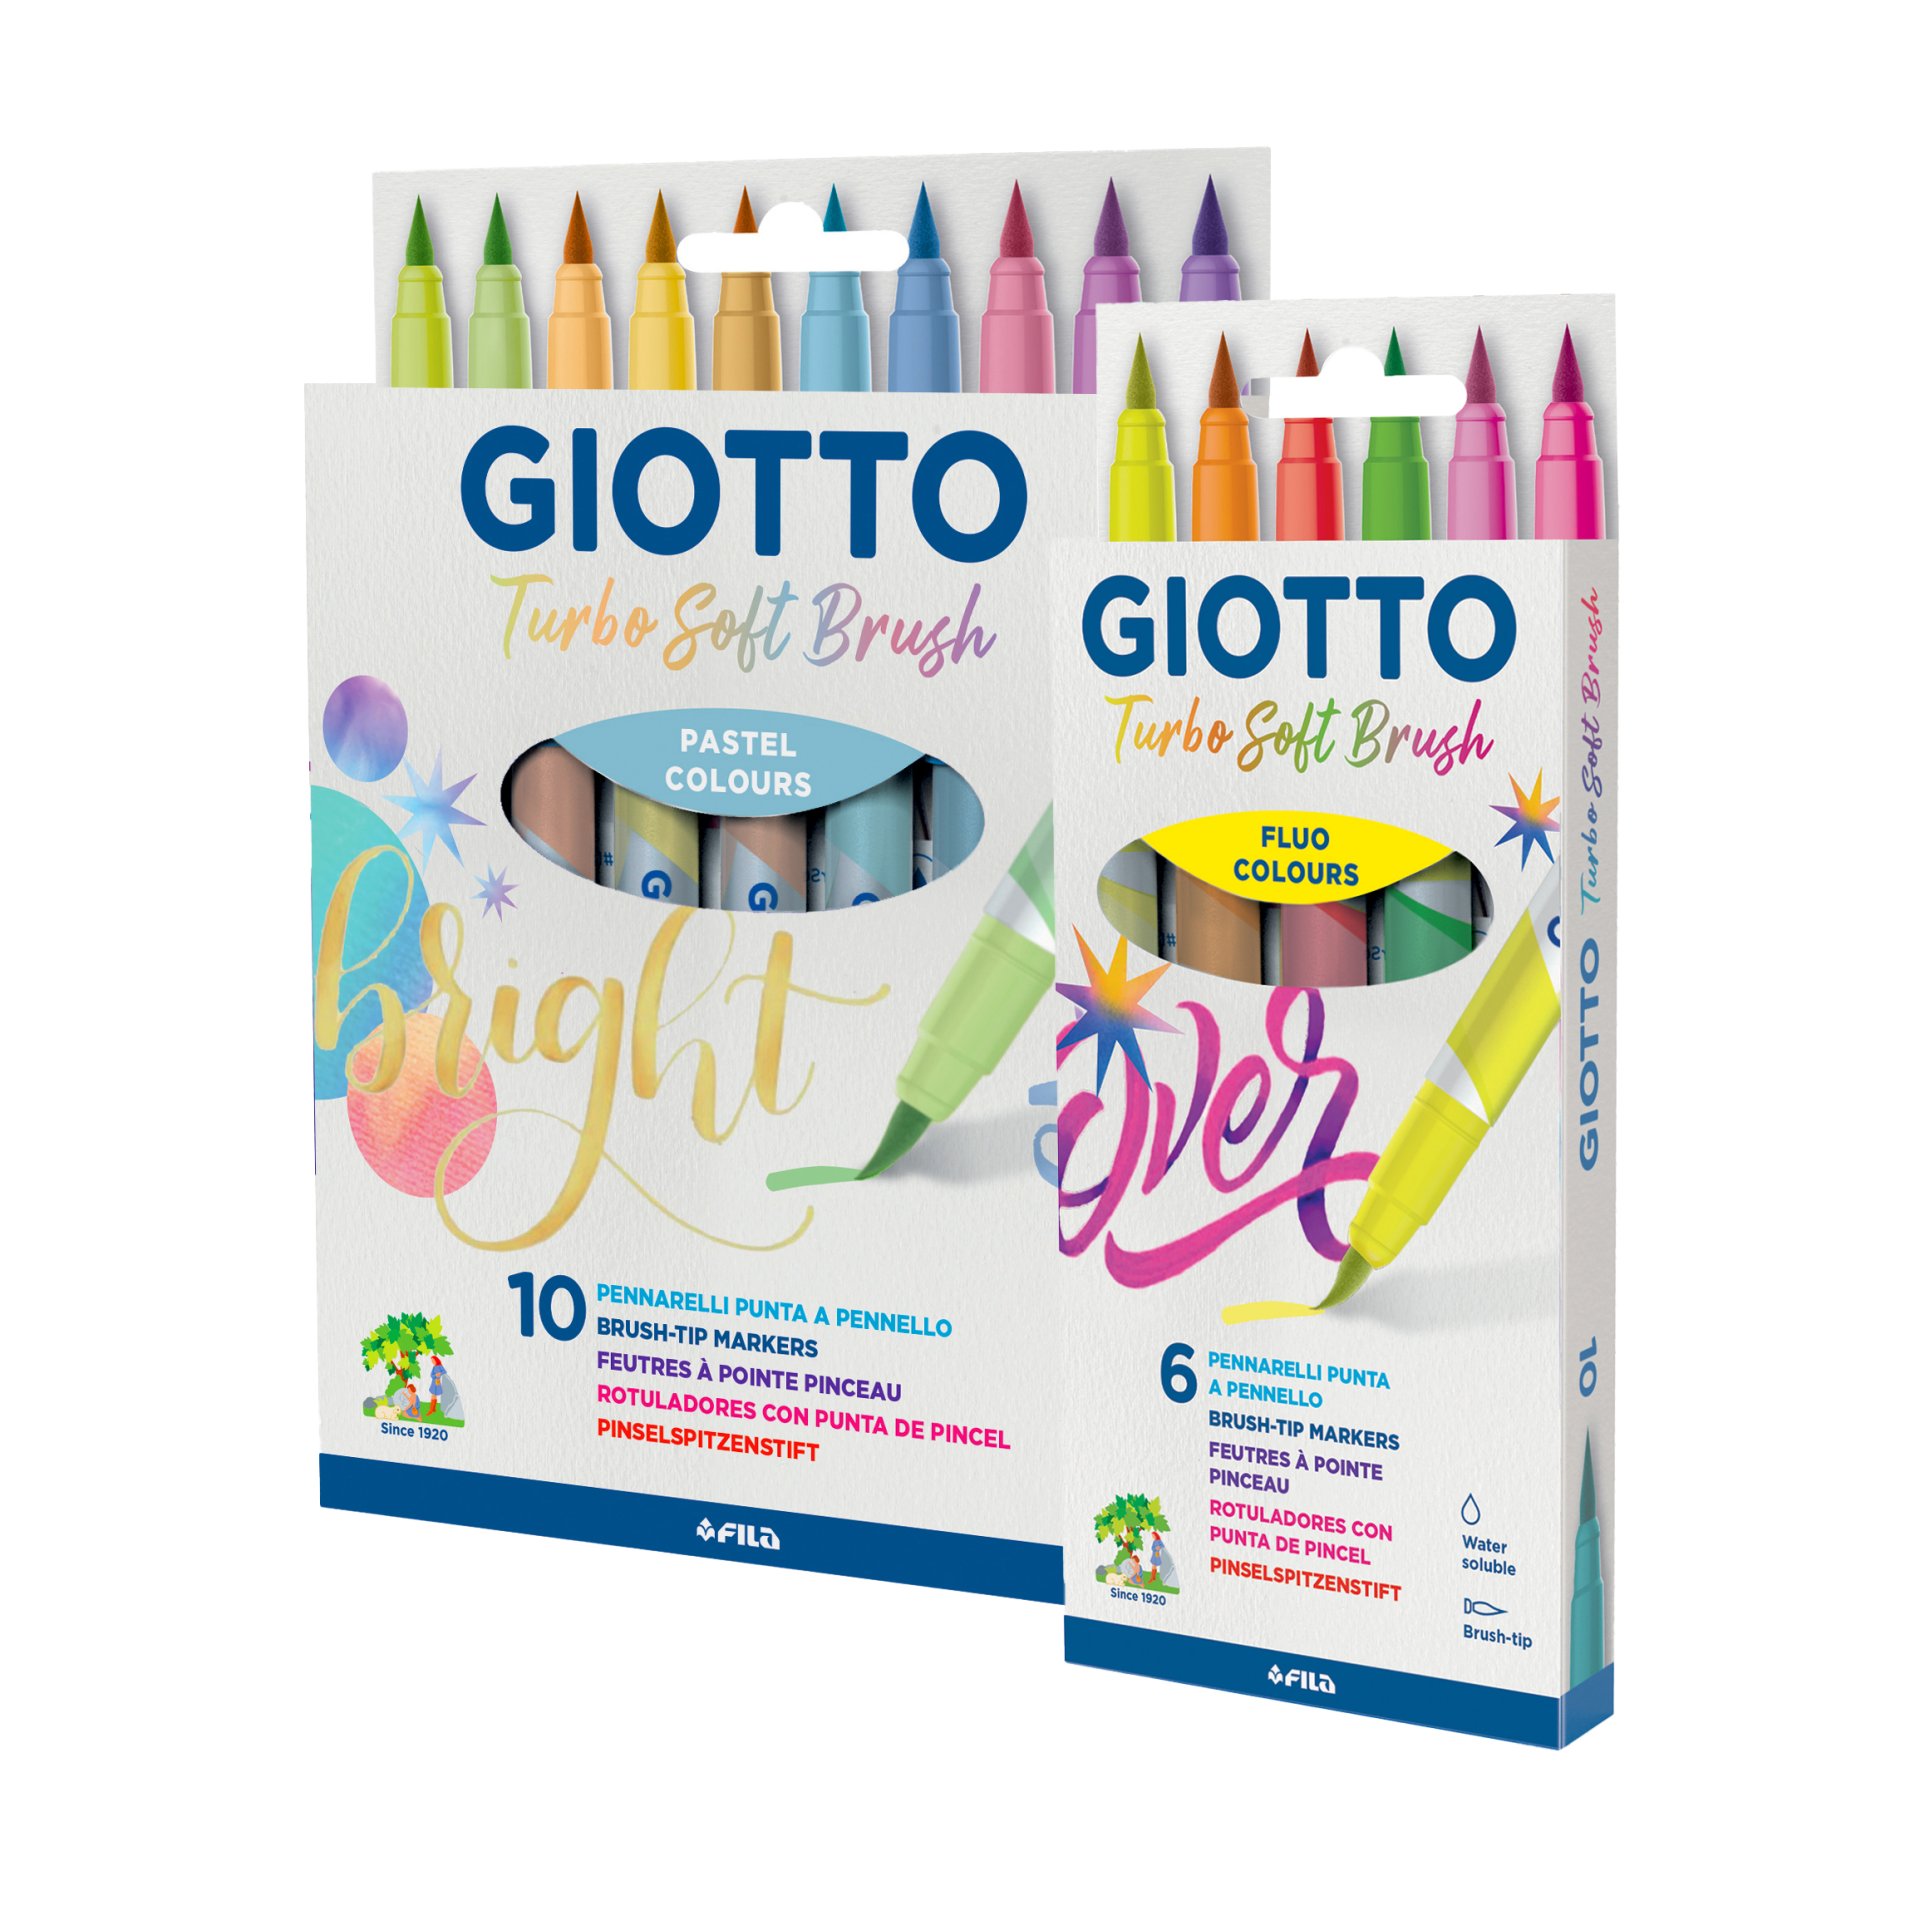 Buy Giotto Brush Pen Turbo Soft Brush Set